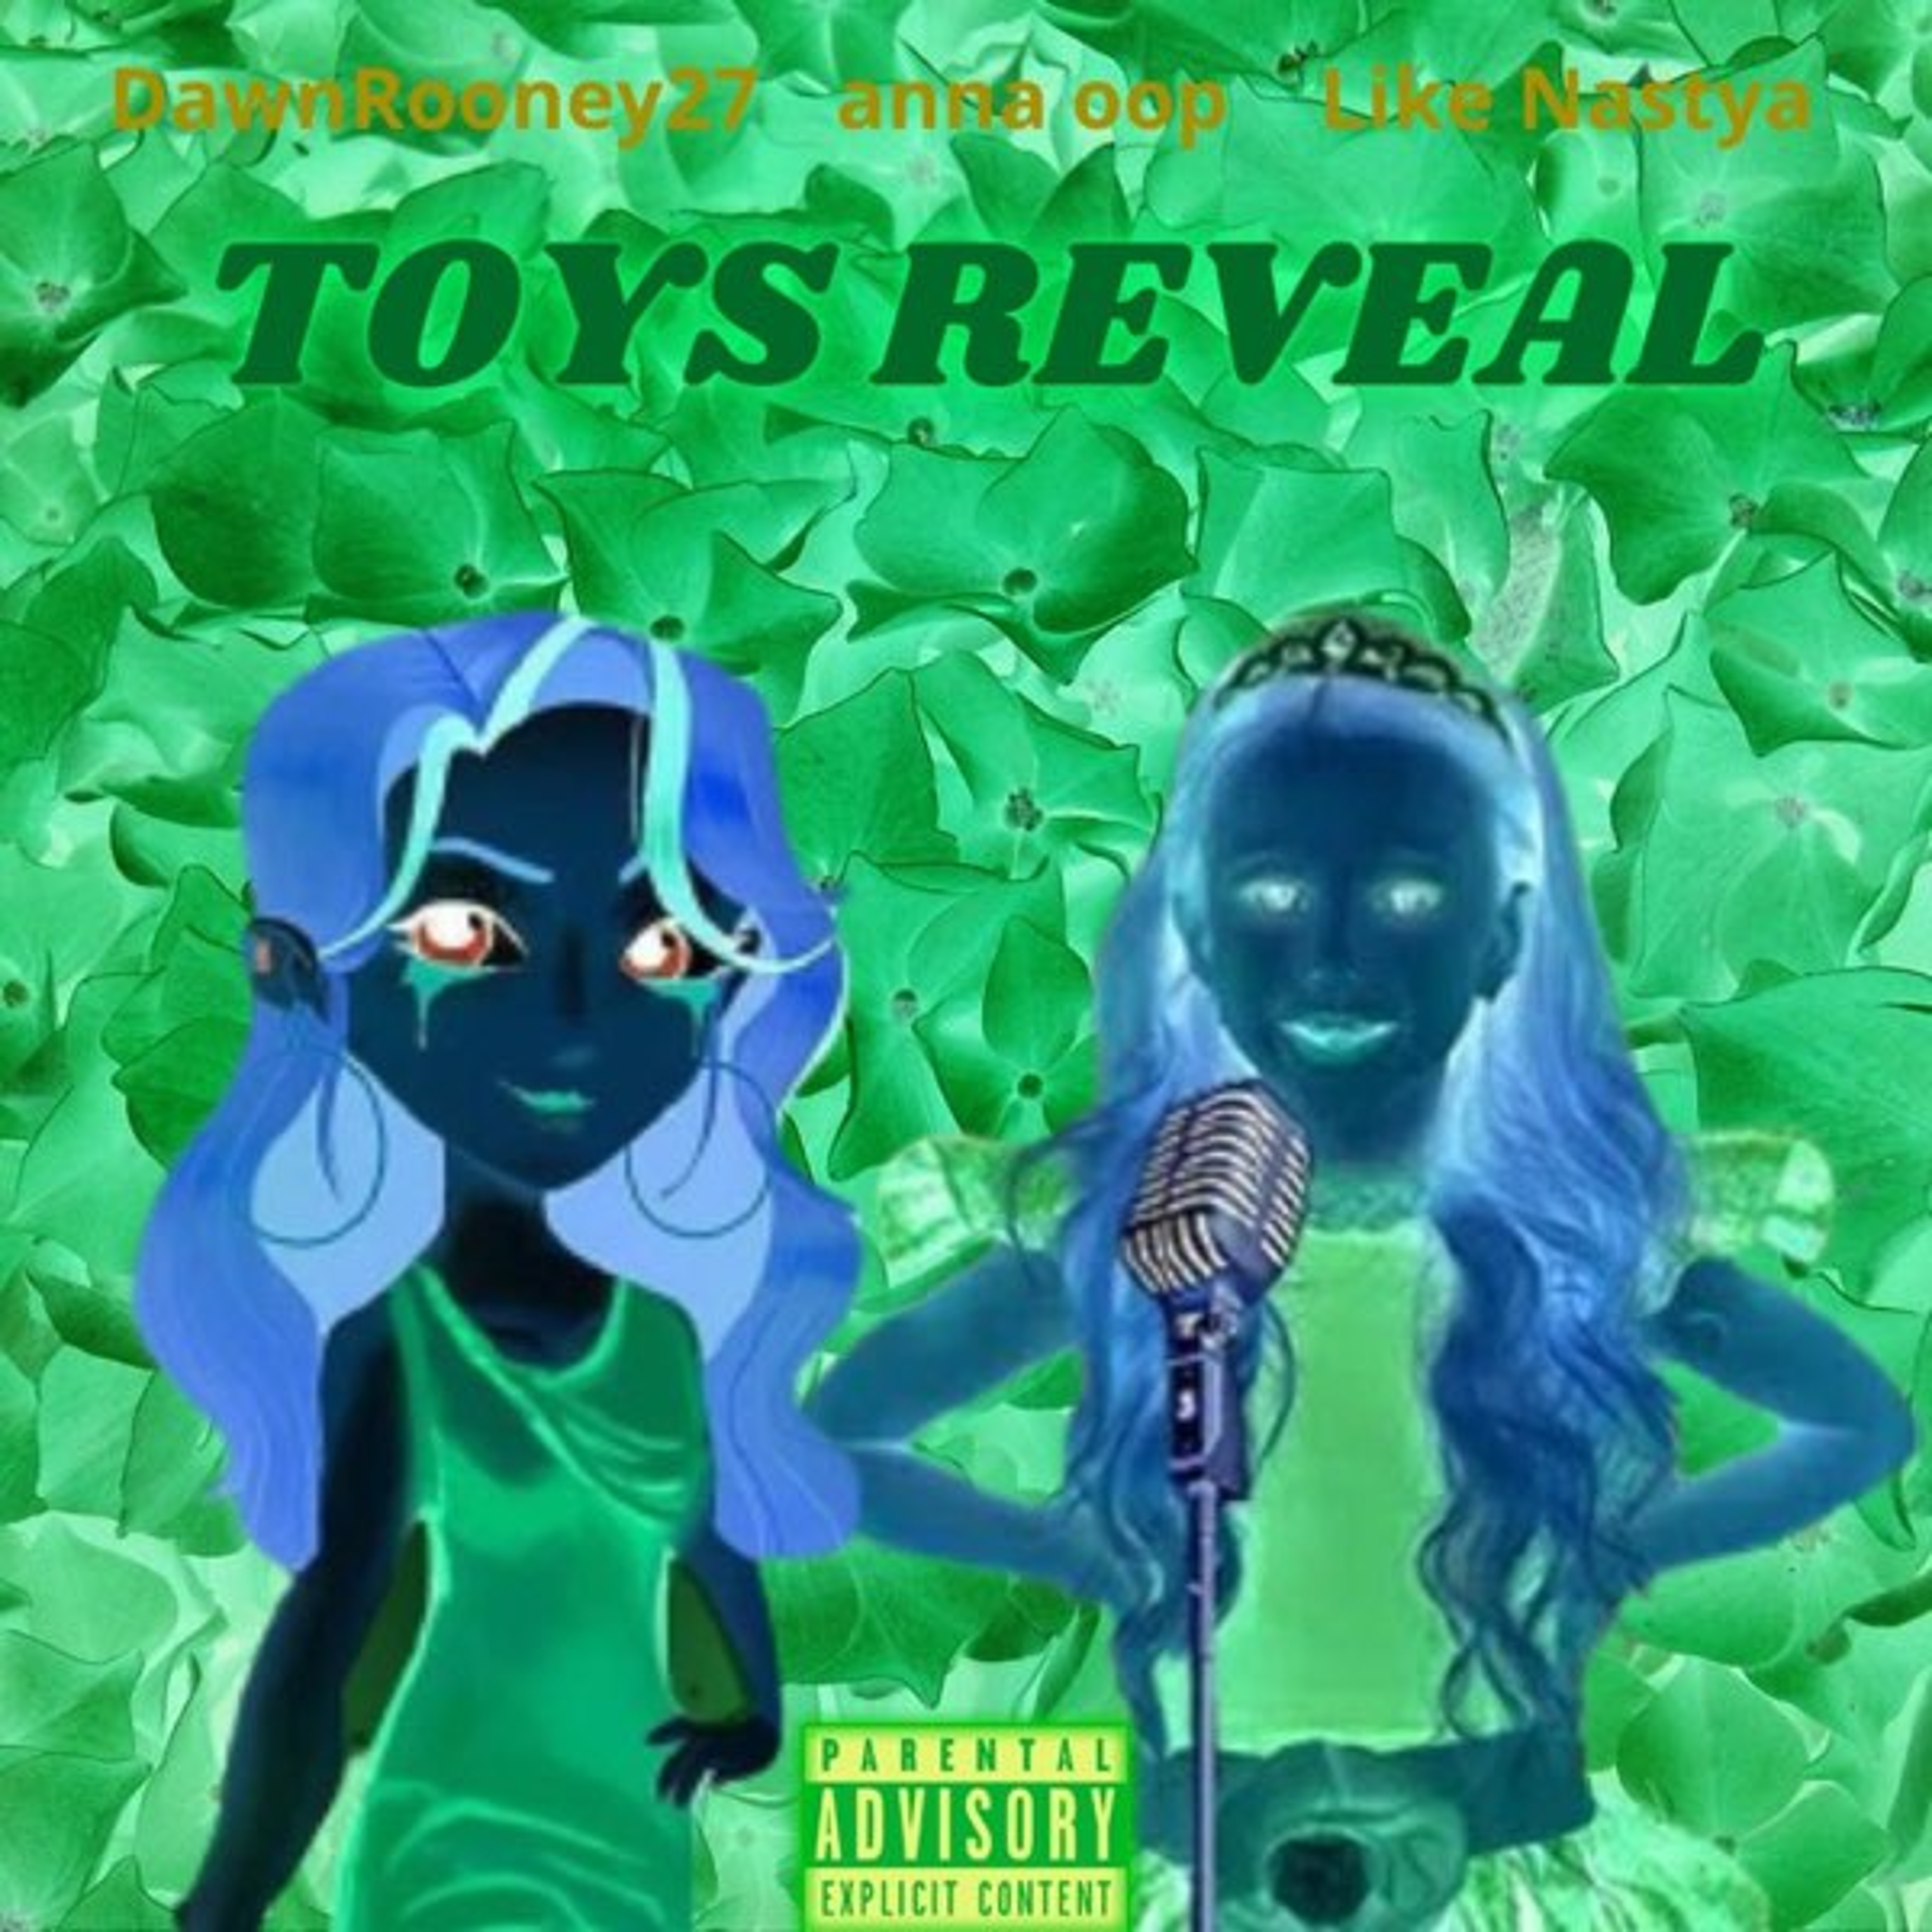 DawnRooney27 featuring Like Nastya, anna oop, & Alex Bainter — Toys Reveal (slowed - reverb) cover artwork